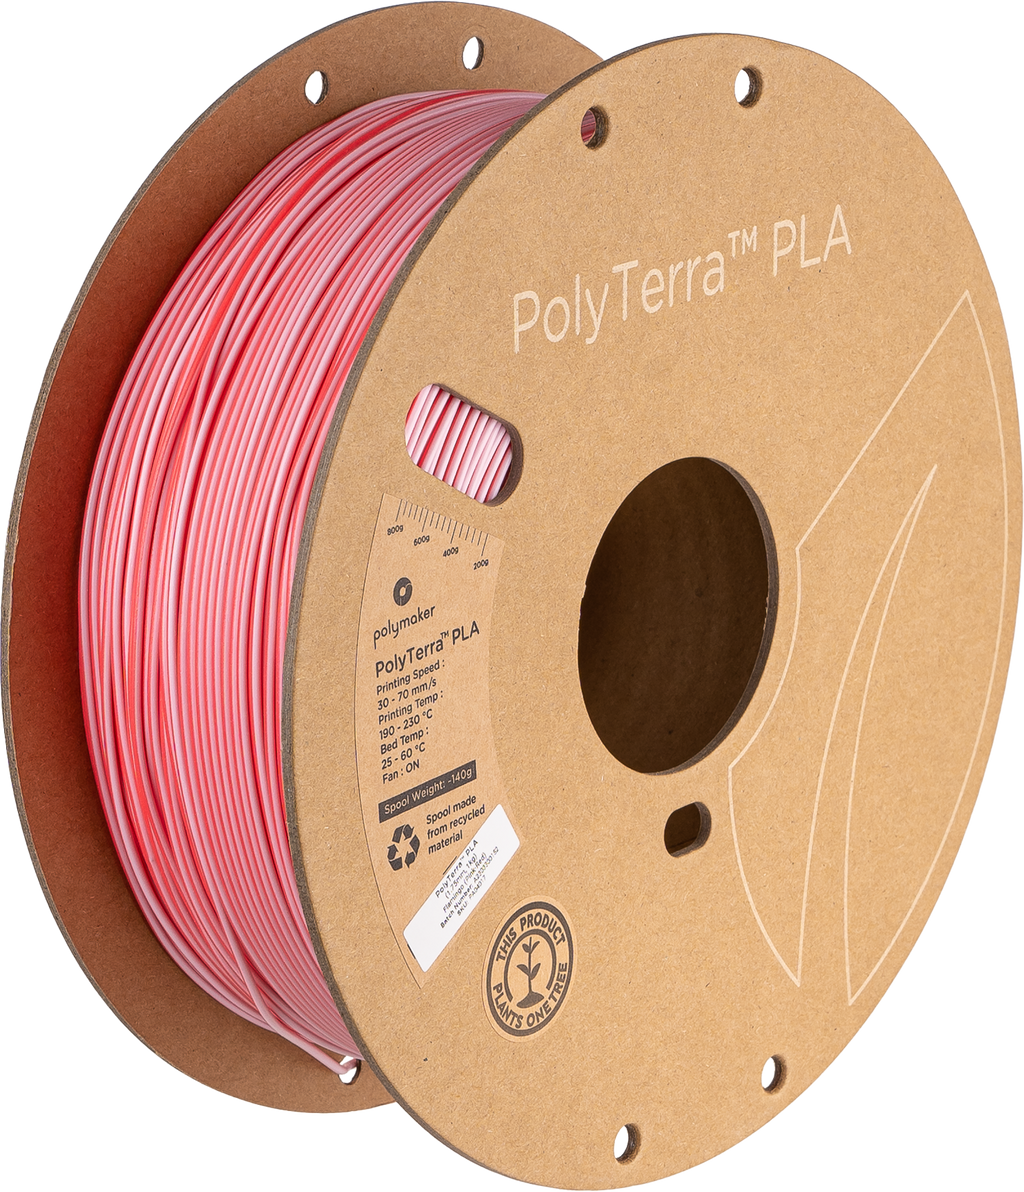 Polymaker Filament Range - Unique Prints